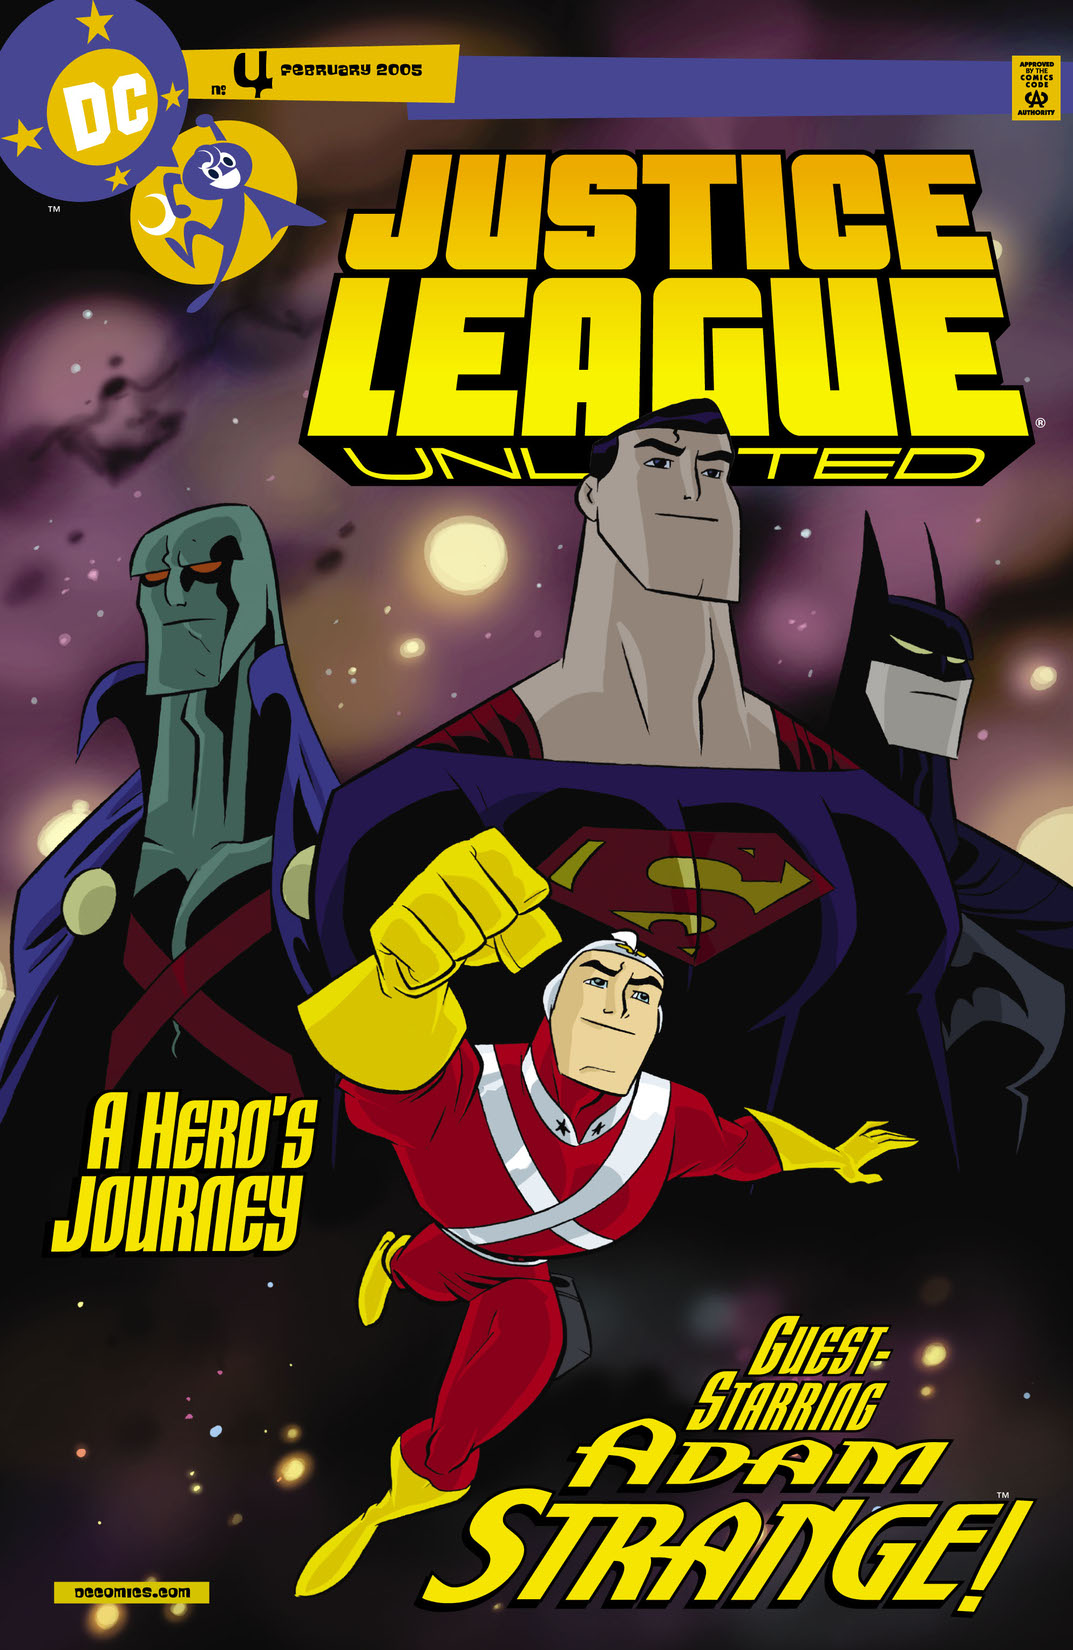 Justice League Unlimited #4 preview images